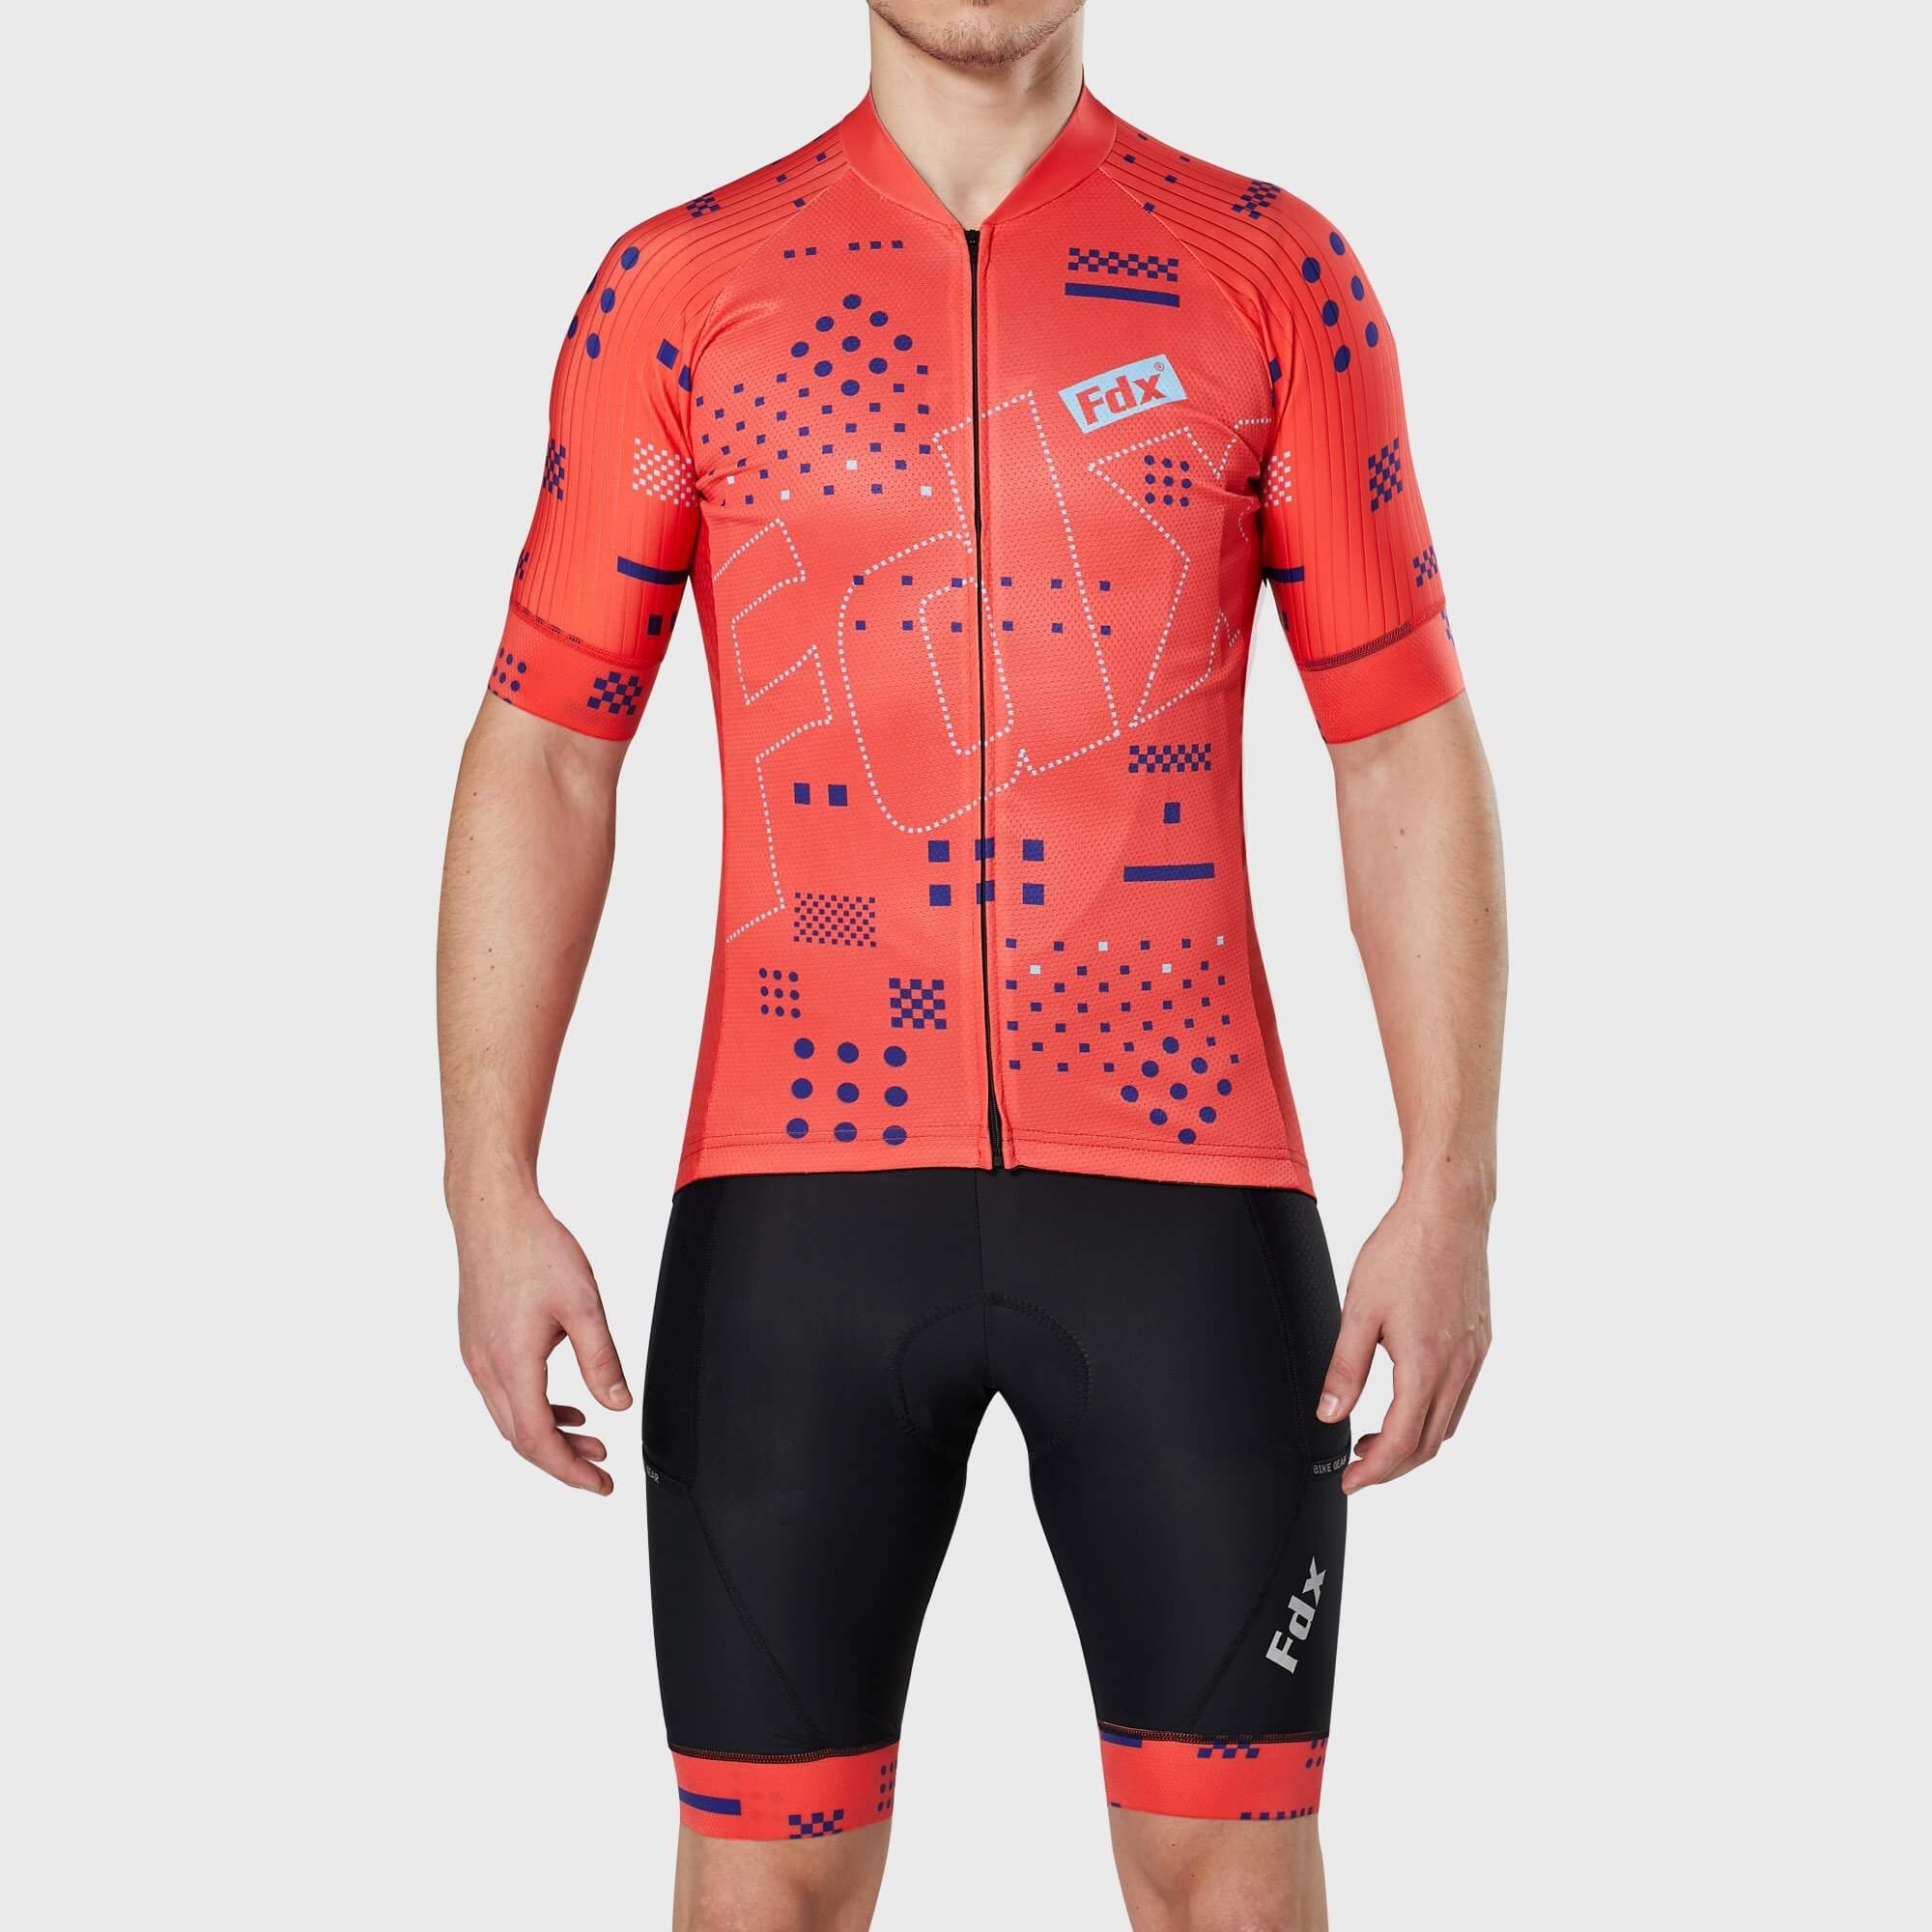 Fdx Mens Red Sleeve Cycling Jersey & Gel Padded Bib Shorts Best Summer Road Bike Wear Light Weight, Hi-viz Reflectors & Pockets - All Day